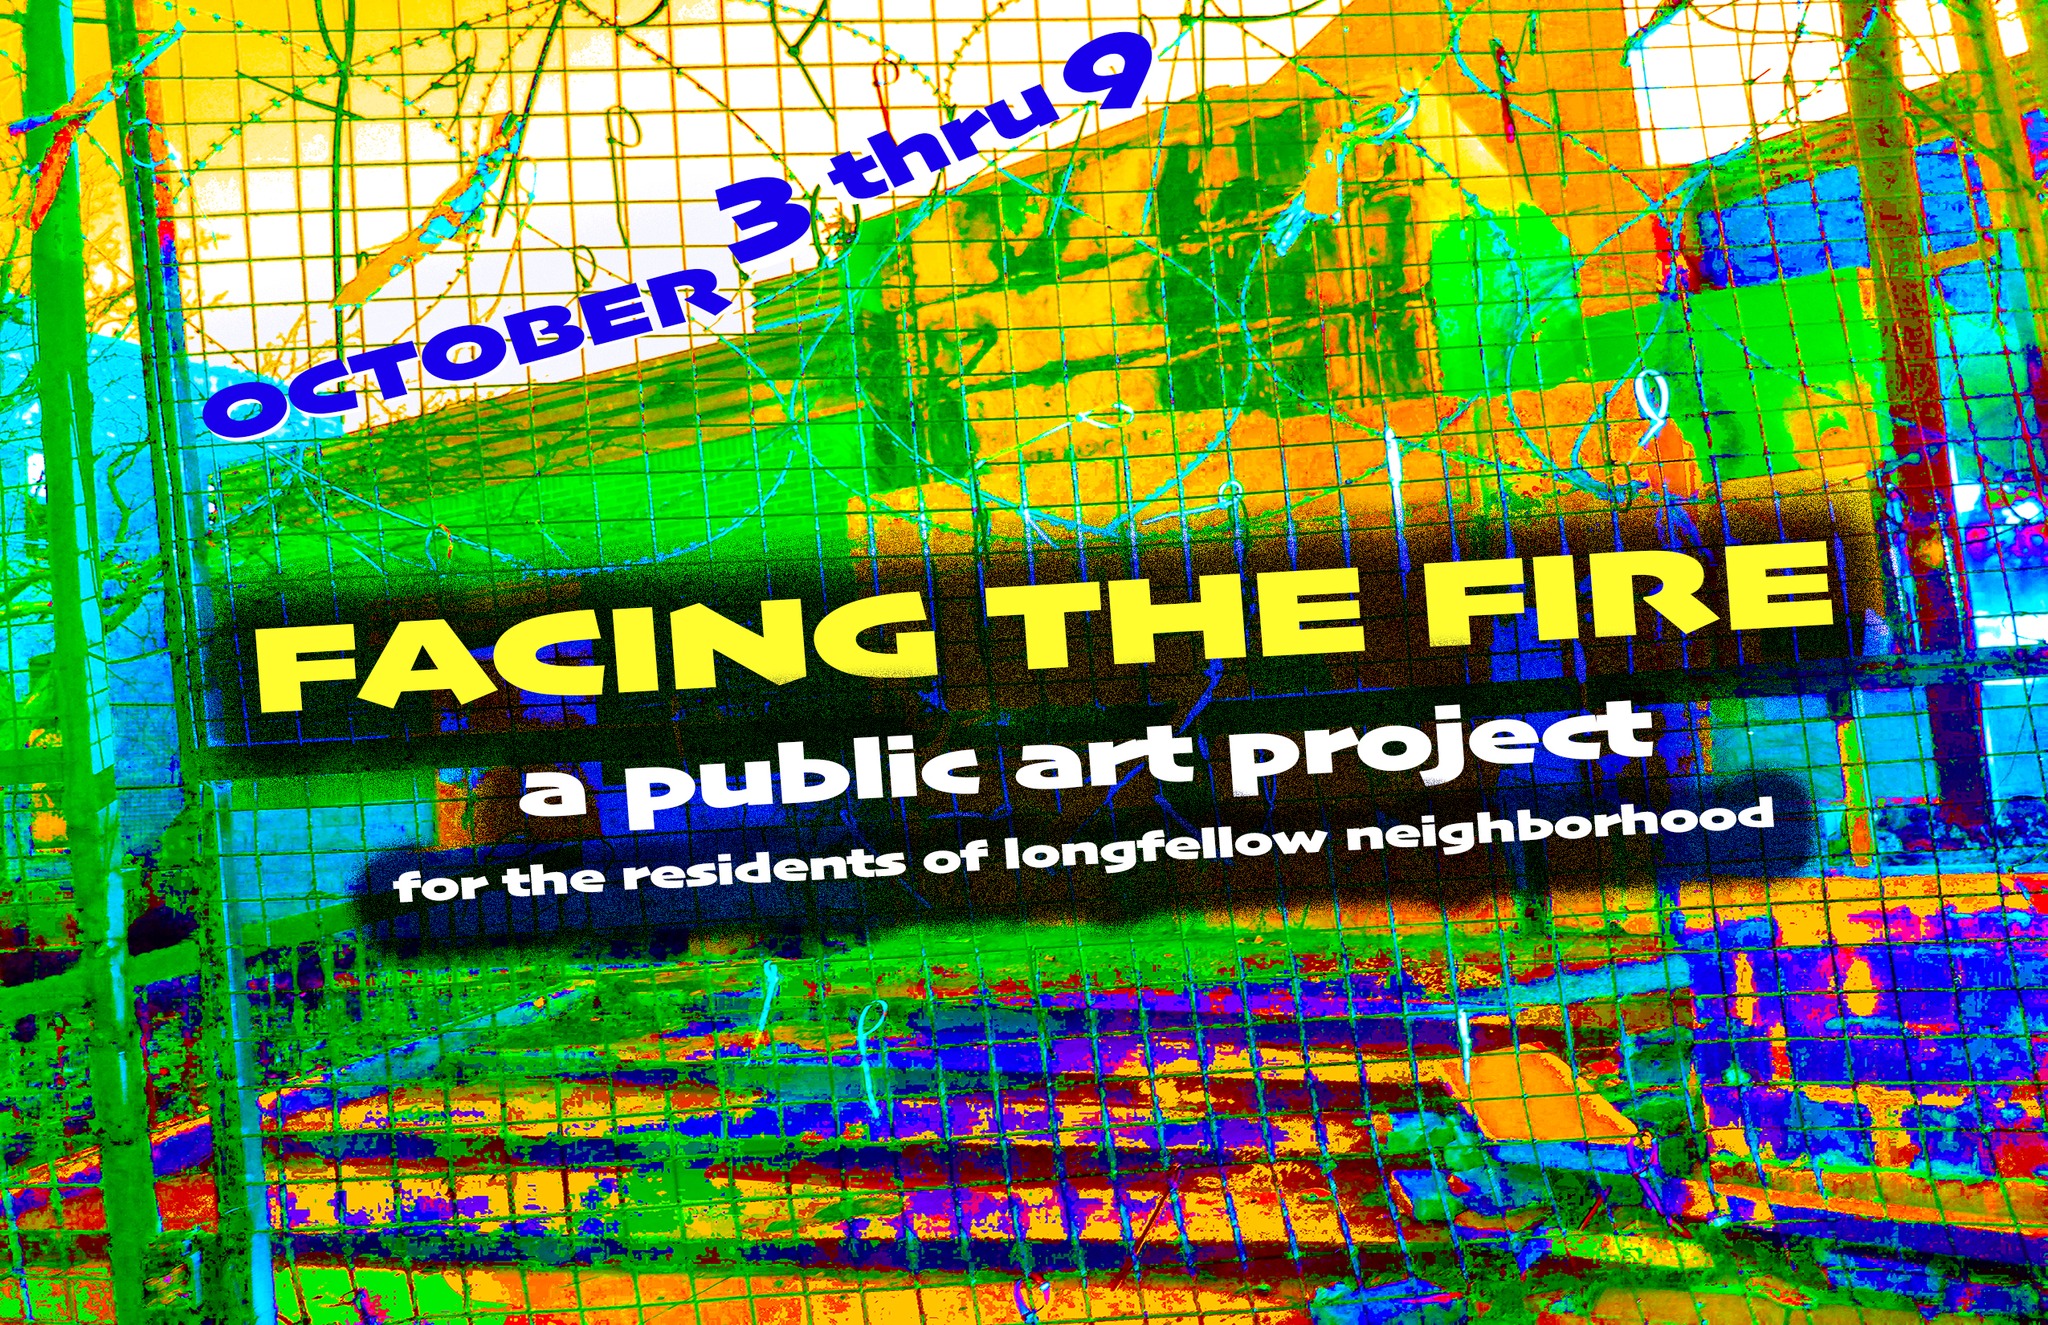 Facing the Fire, a public art project in Longfellow neighborhood Oct 3-9